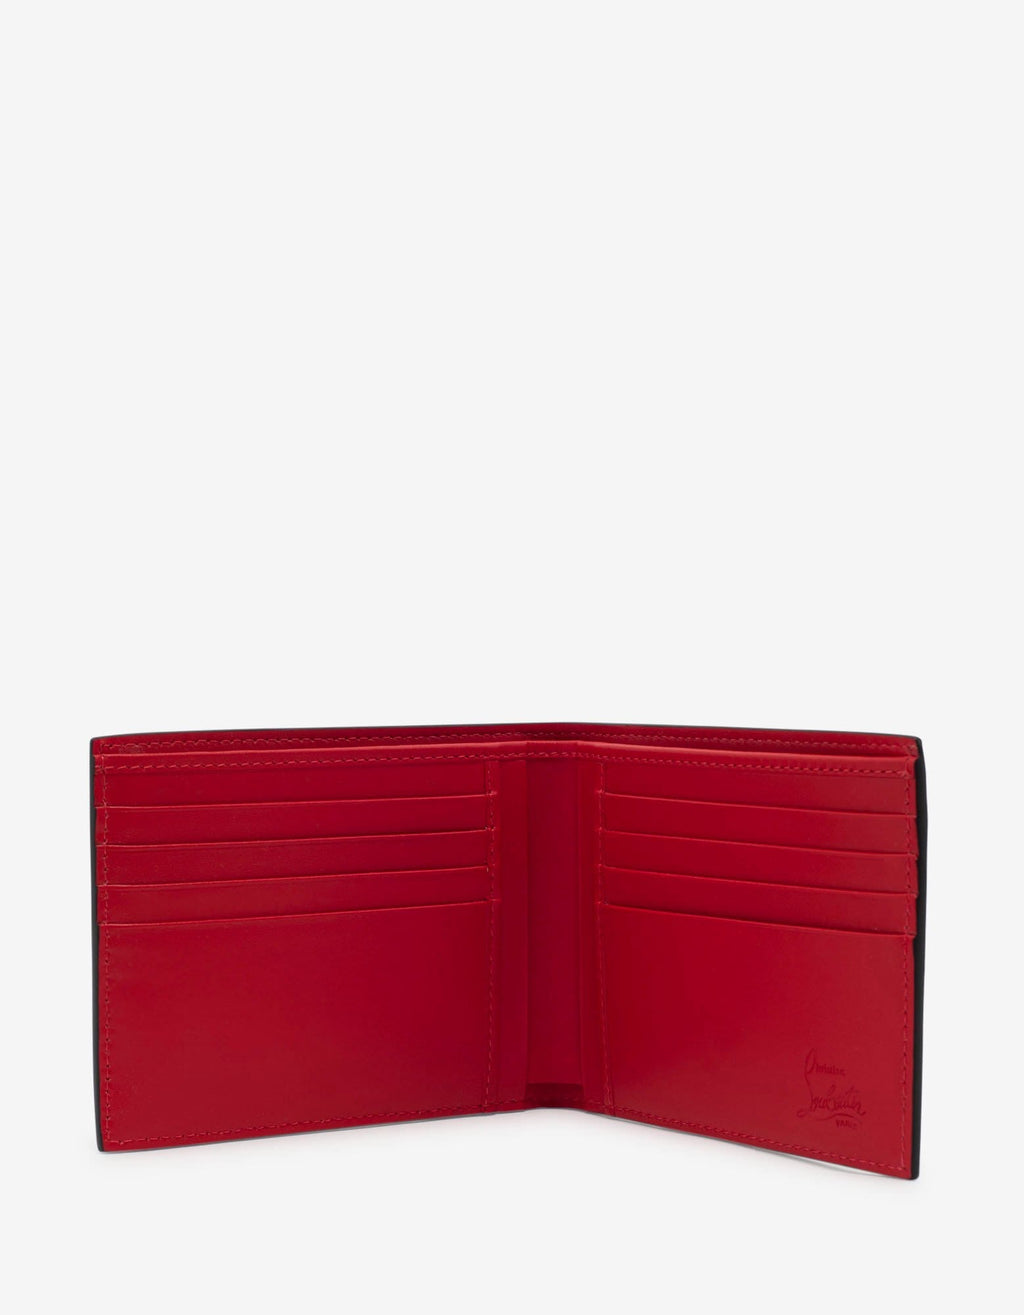 Christian Louboutin Coolcard Sneakers Sole Black & Red Billfold Wallet